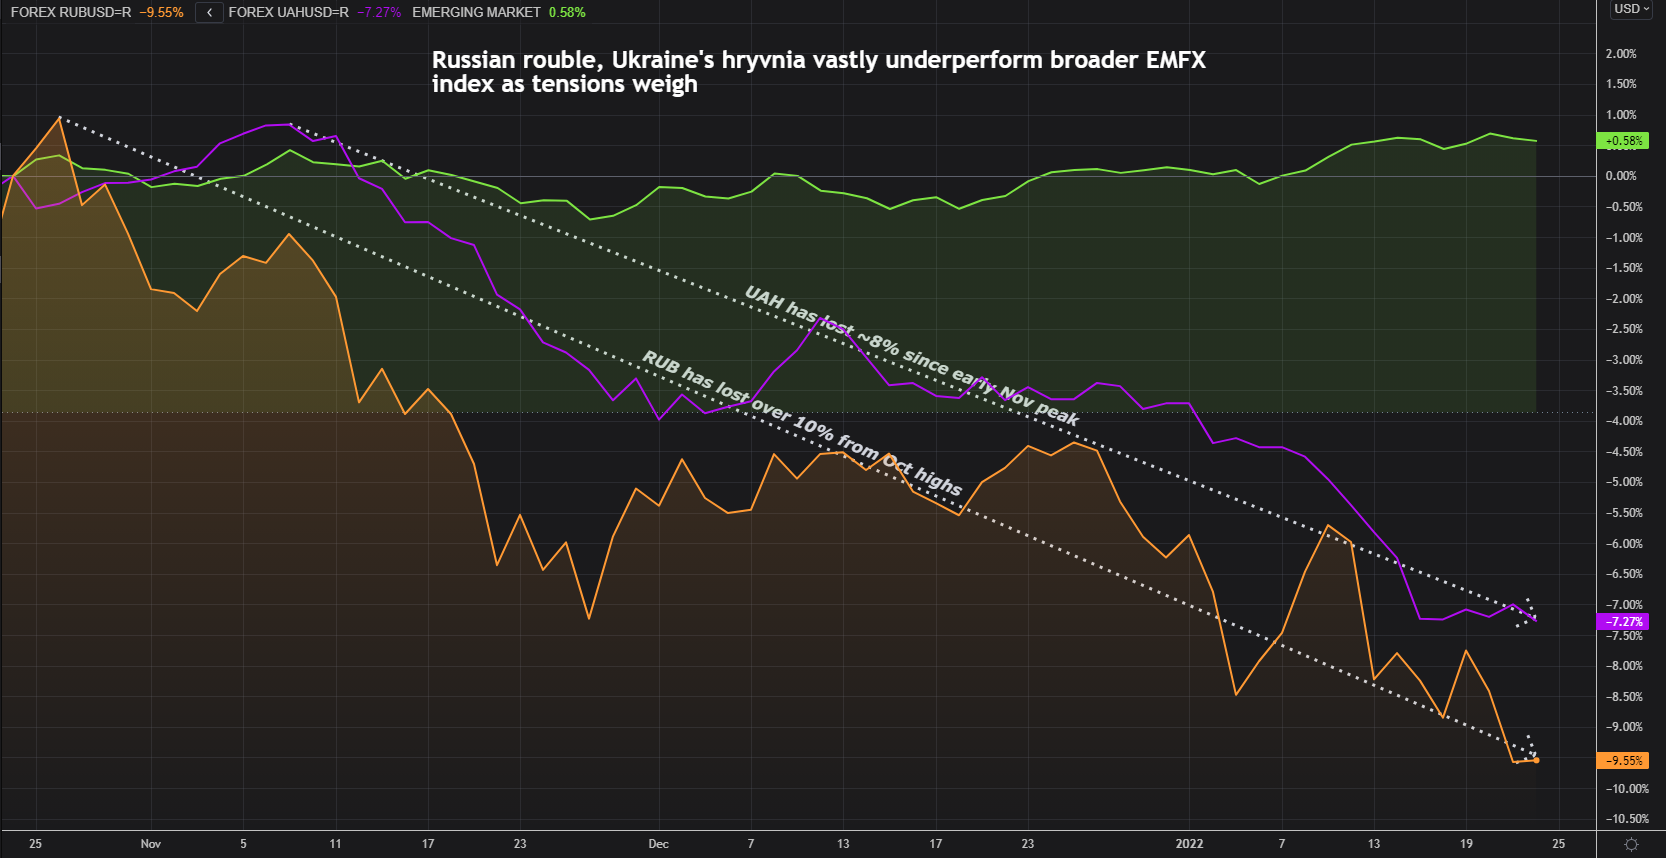 Russian rouble, Ukrainian hryvnia underperform